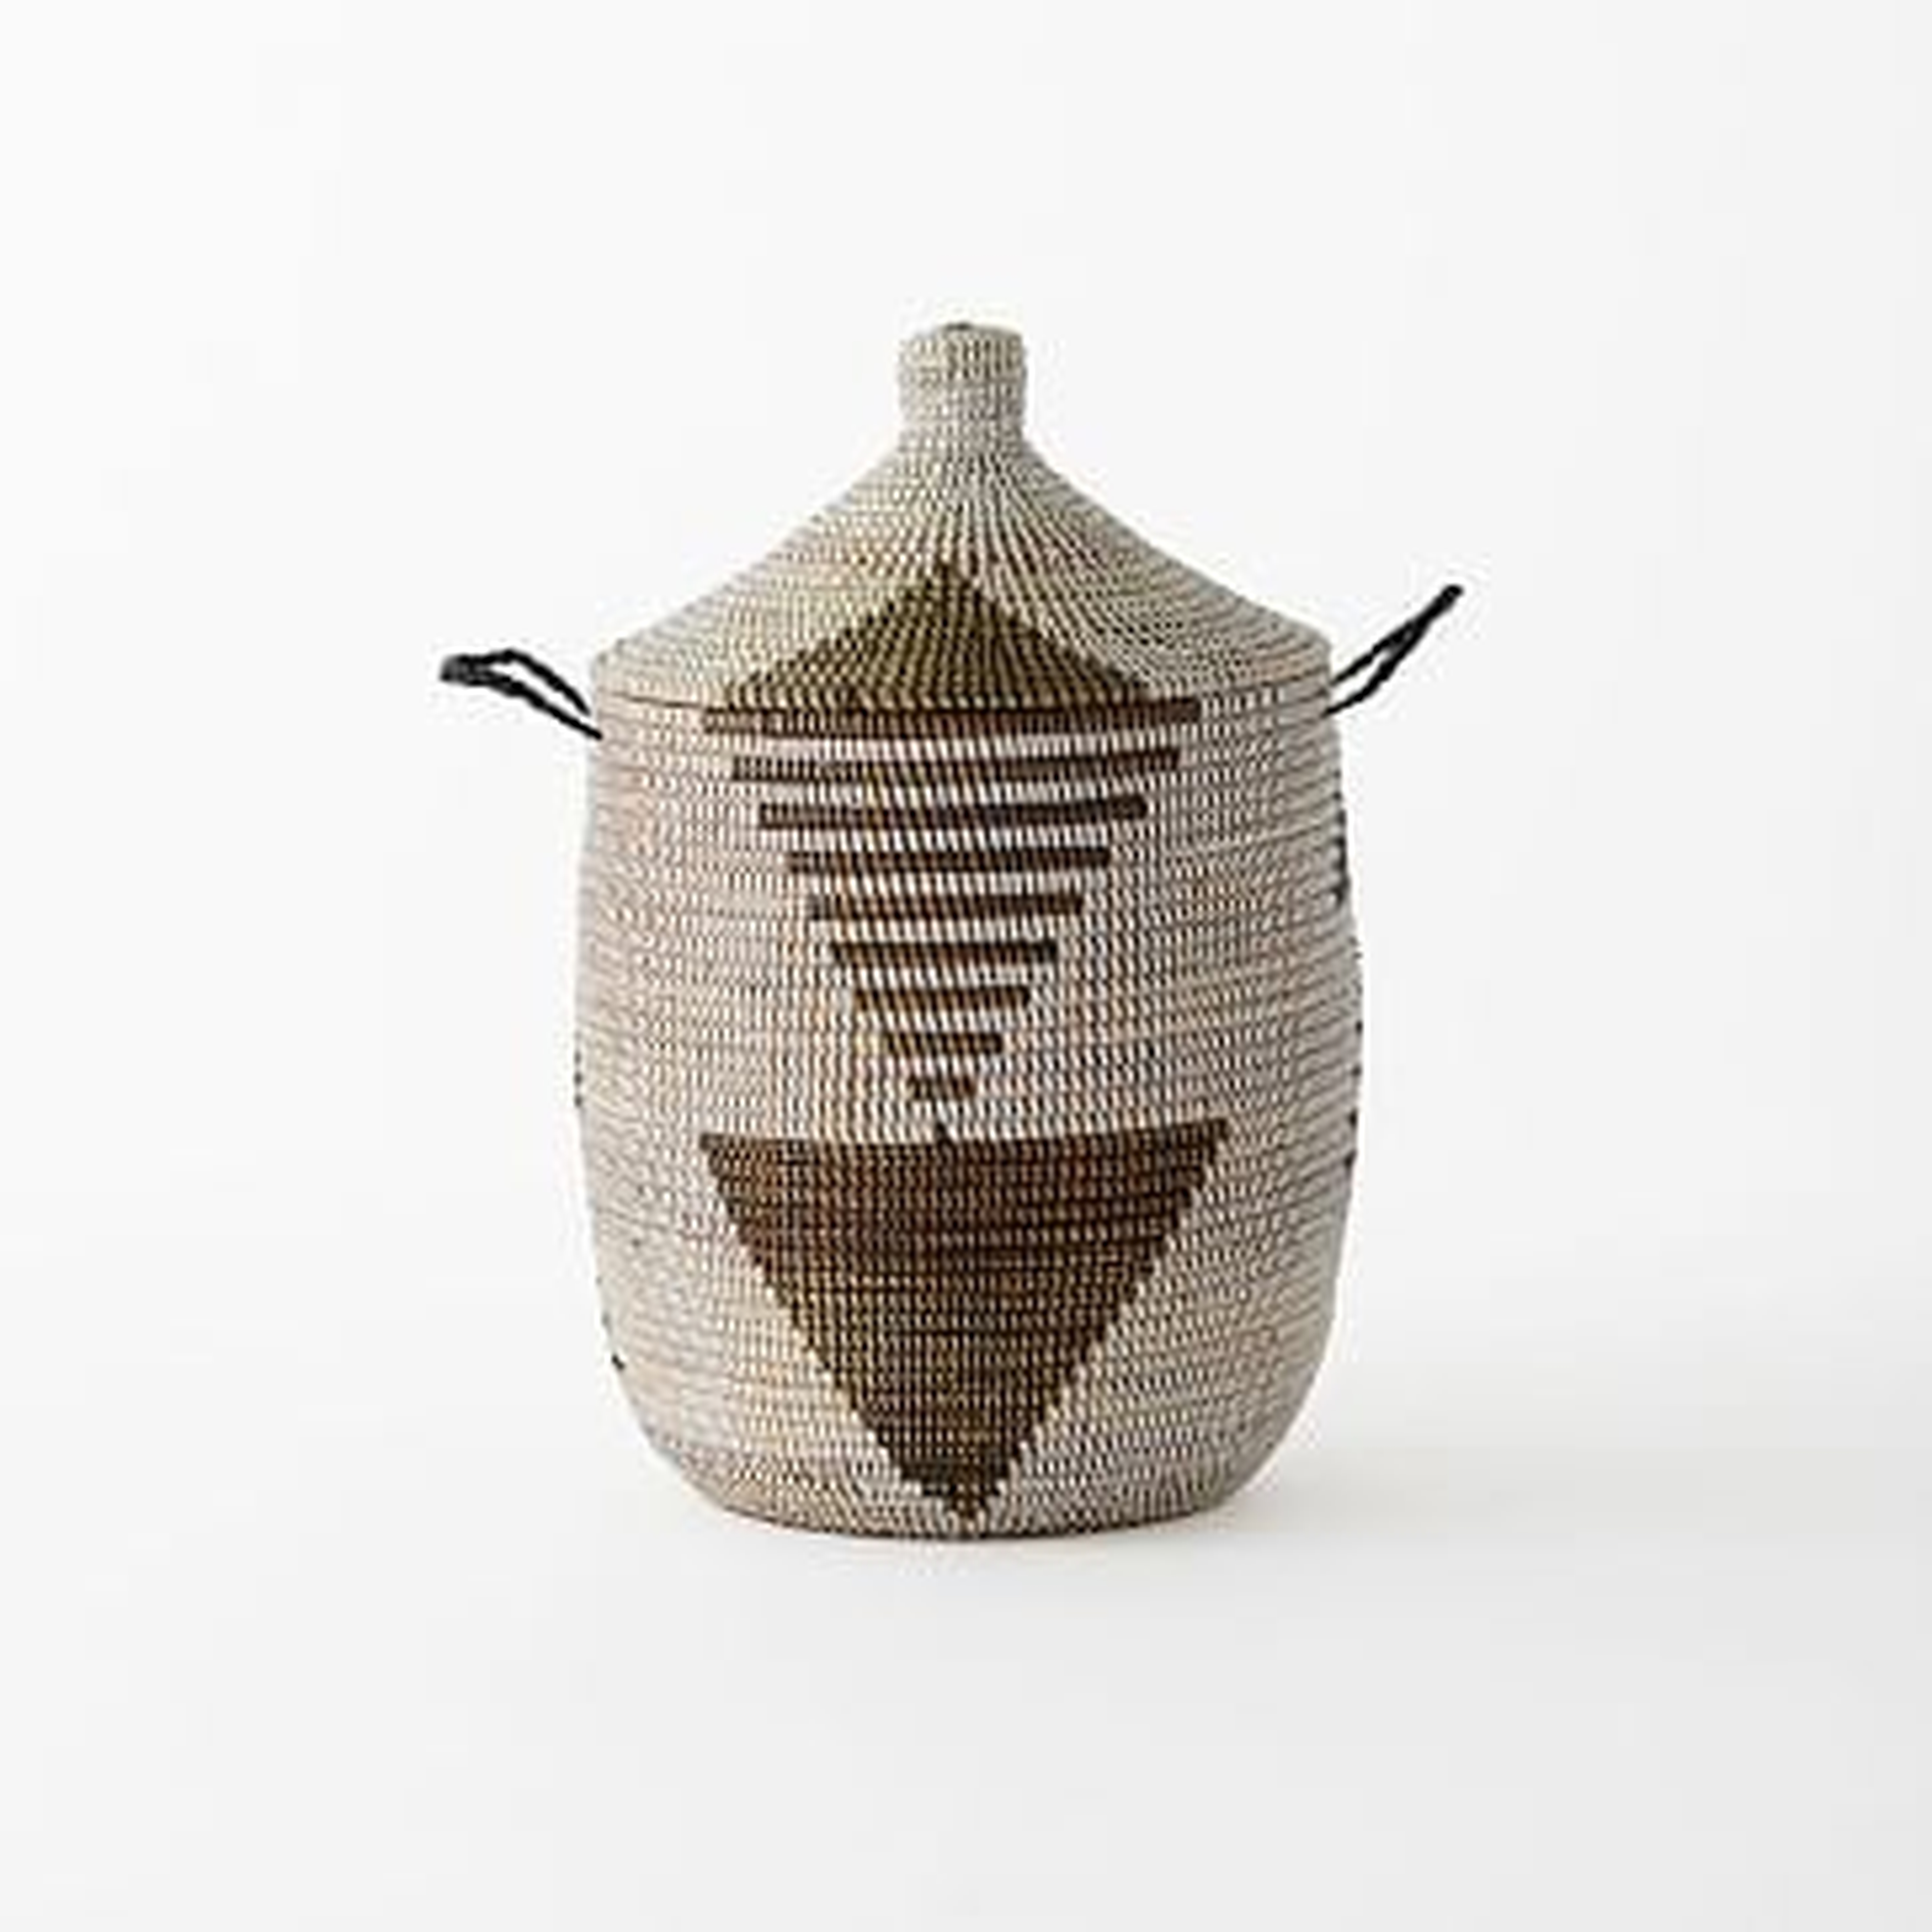 Graphic Printed Basket, Black/White, Medium - West Elm